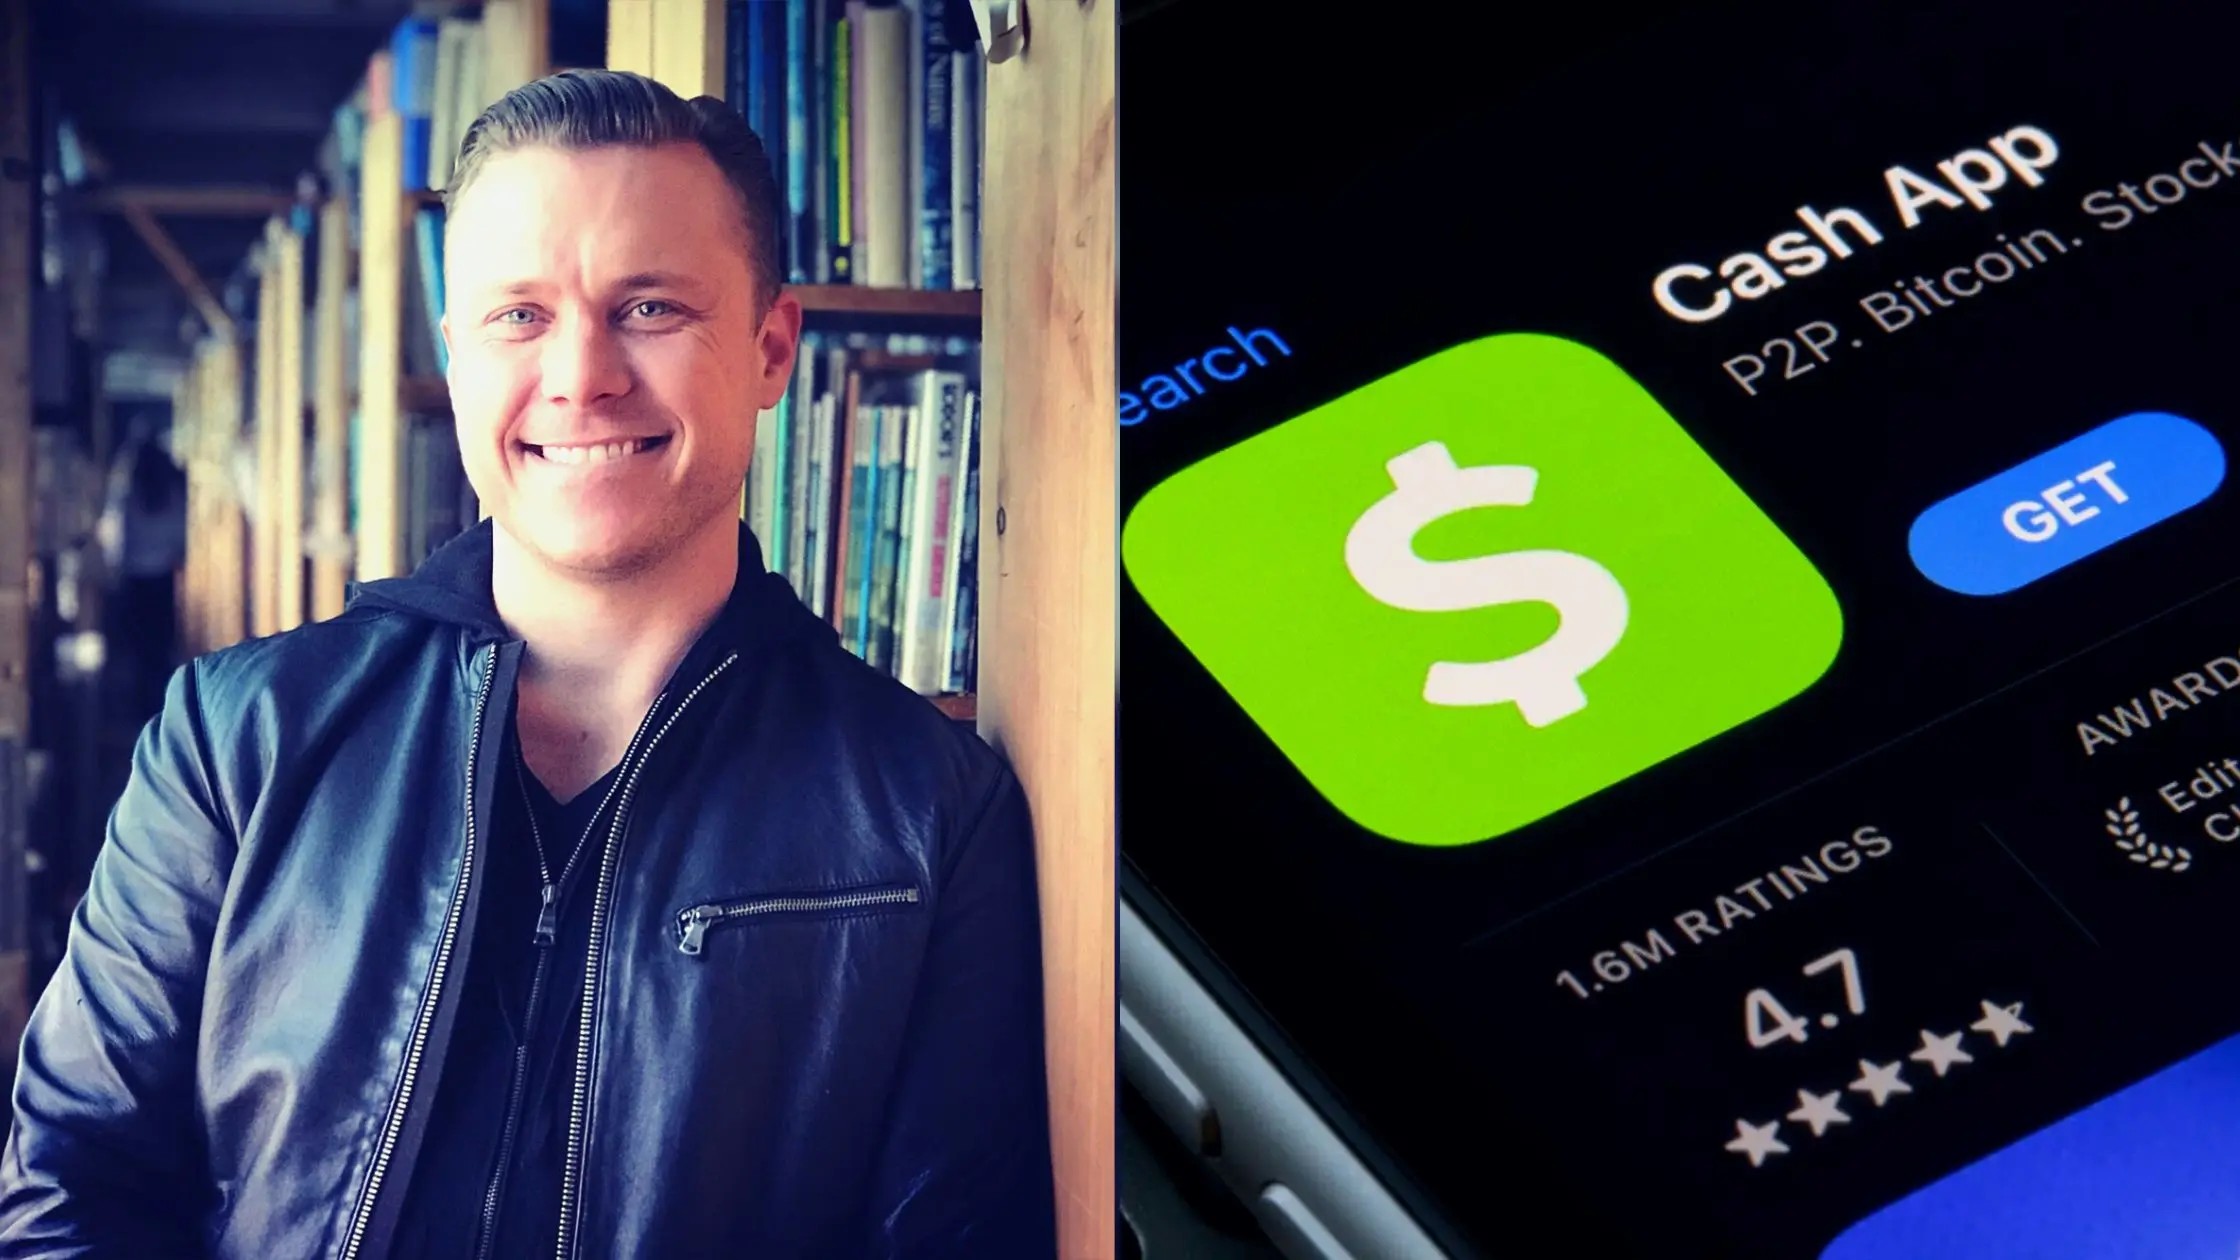 Cash App Founder Bob Lee, 43, Killed In San Francisco